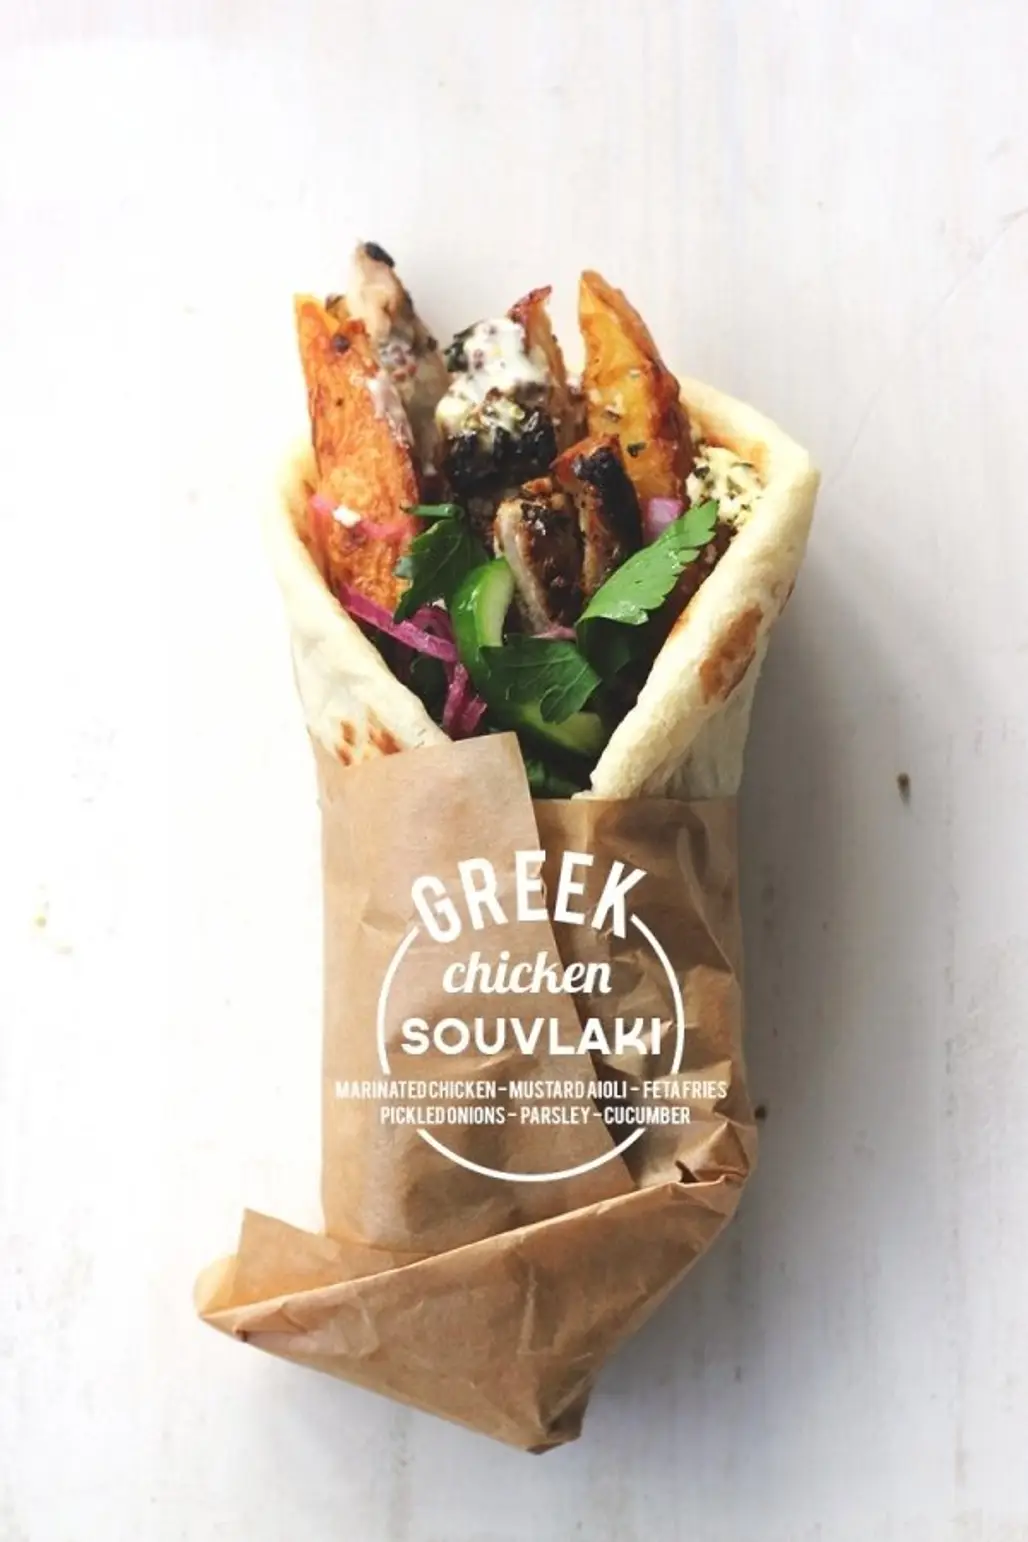 Chicken Souvlaki – the Ubiquitous Street Food